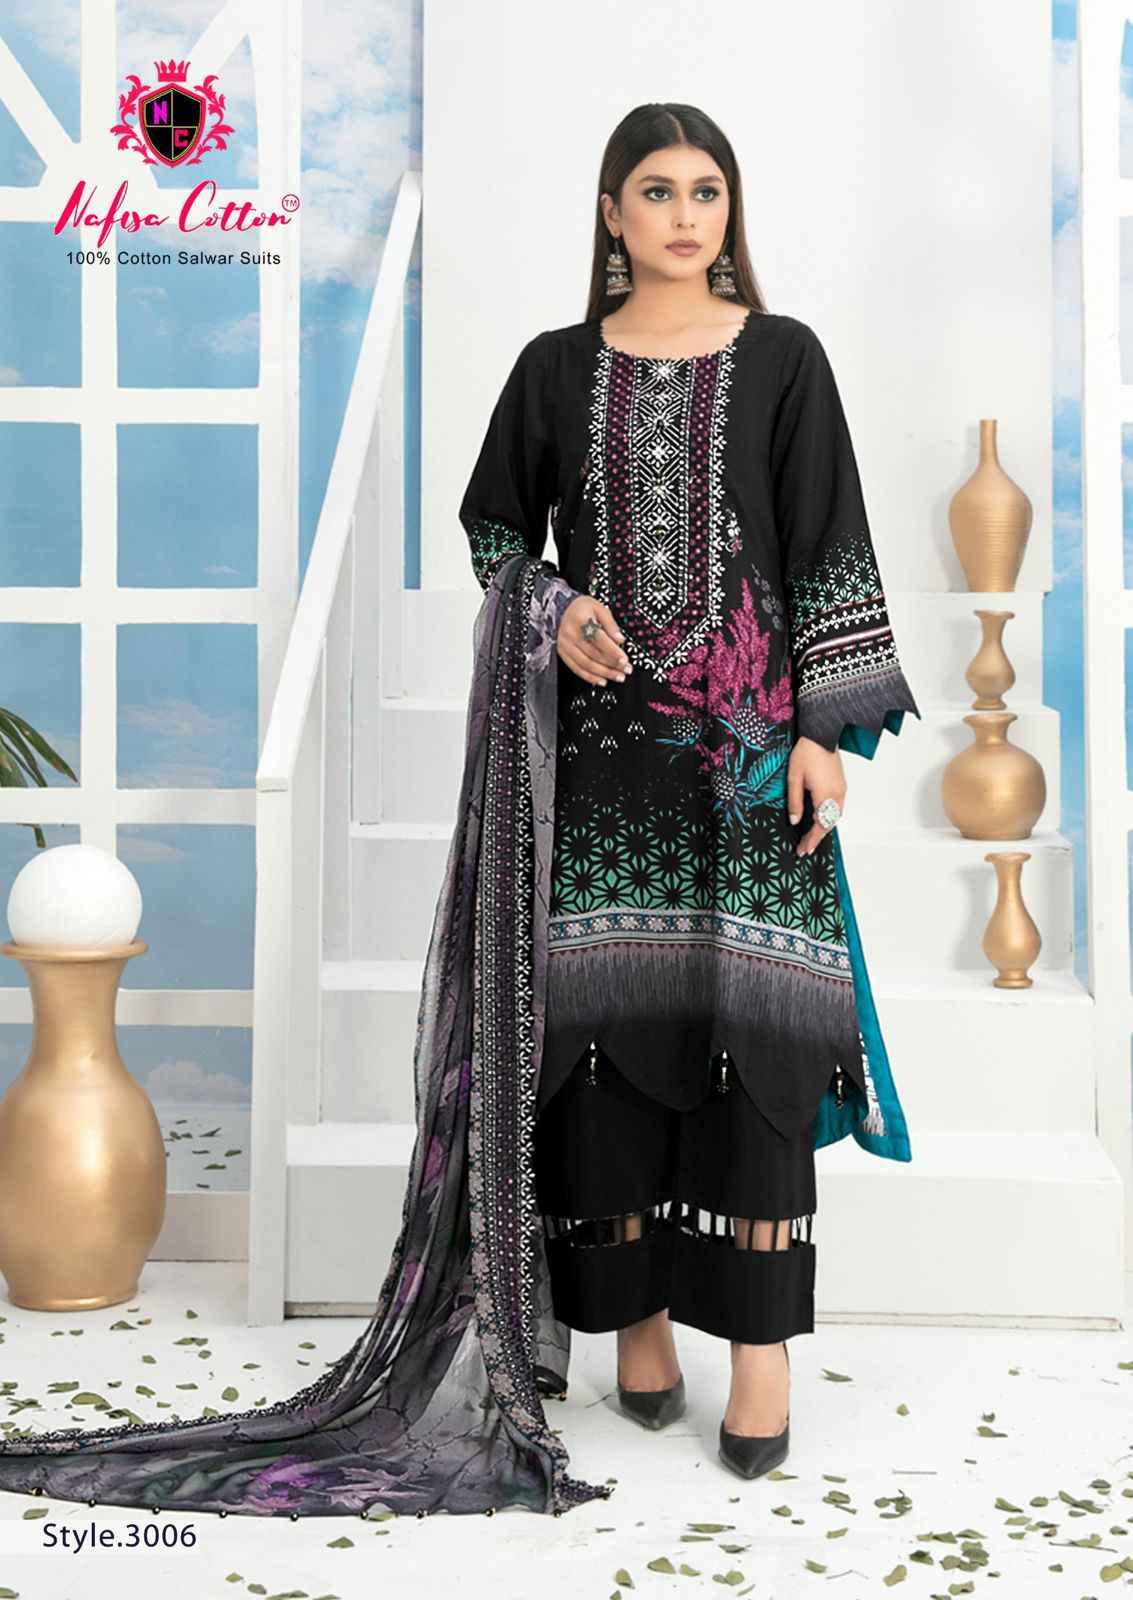 Nafisa Cotton Andaaz Karachi Vol 3 Cotton Dress Material (6 Pc Catalog)